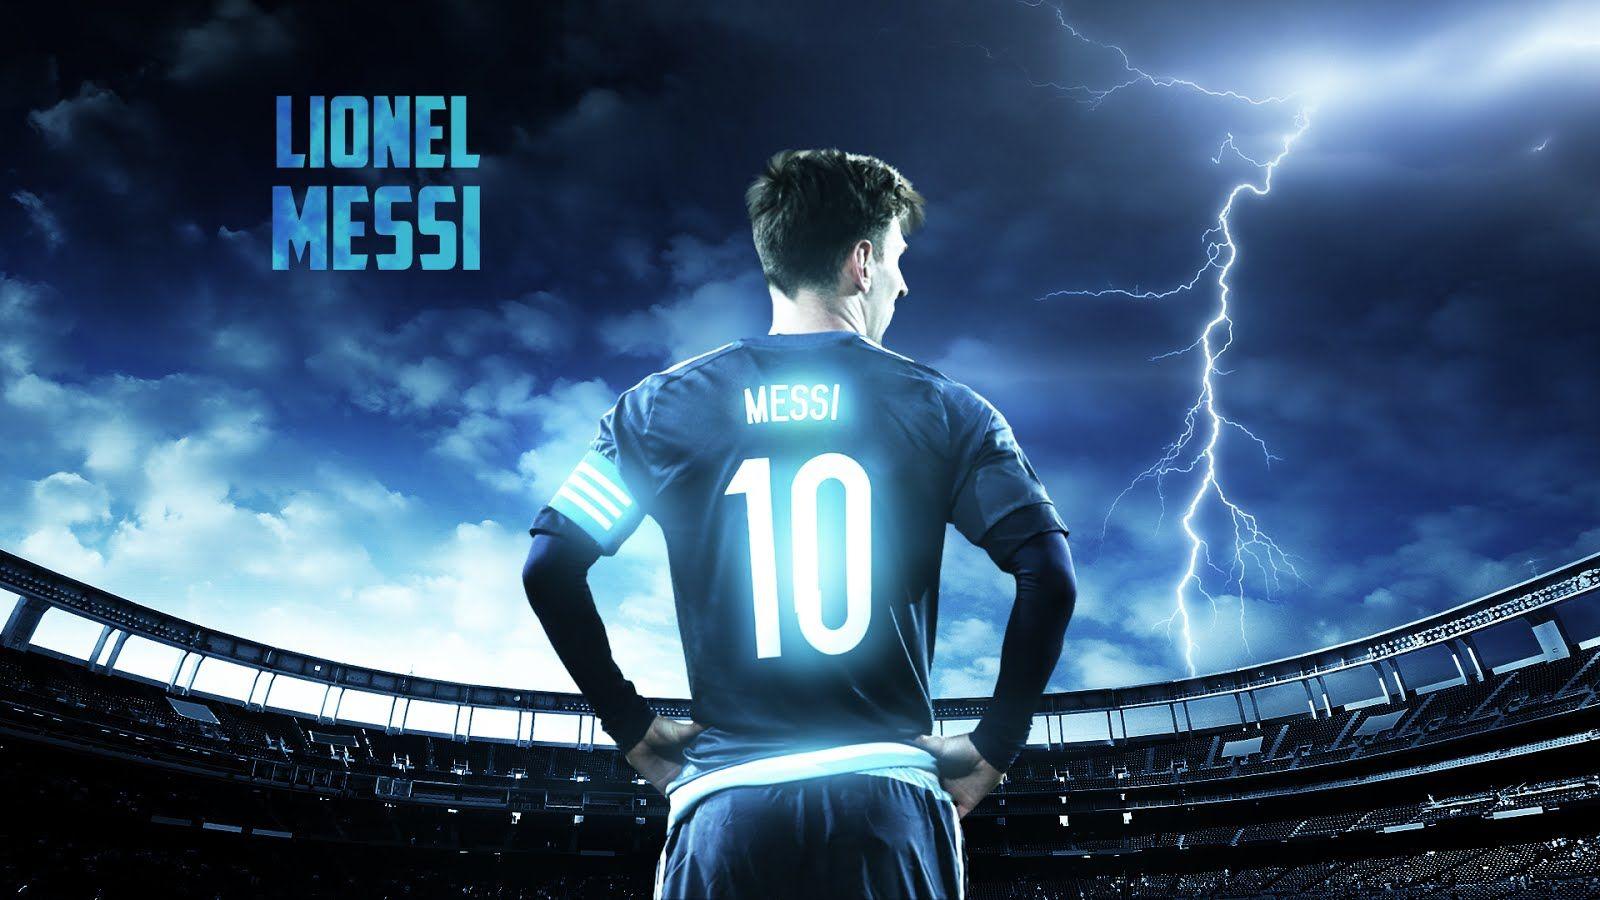 Lionel Messi HD Wallpaper 2017 Free Download